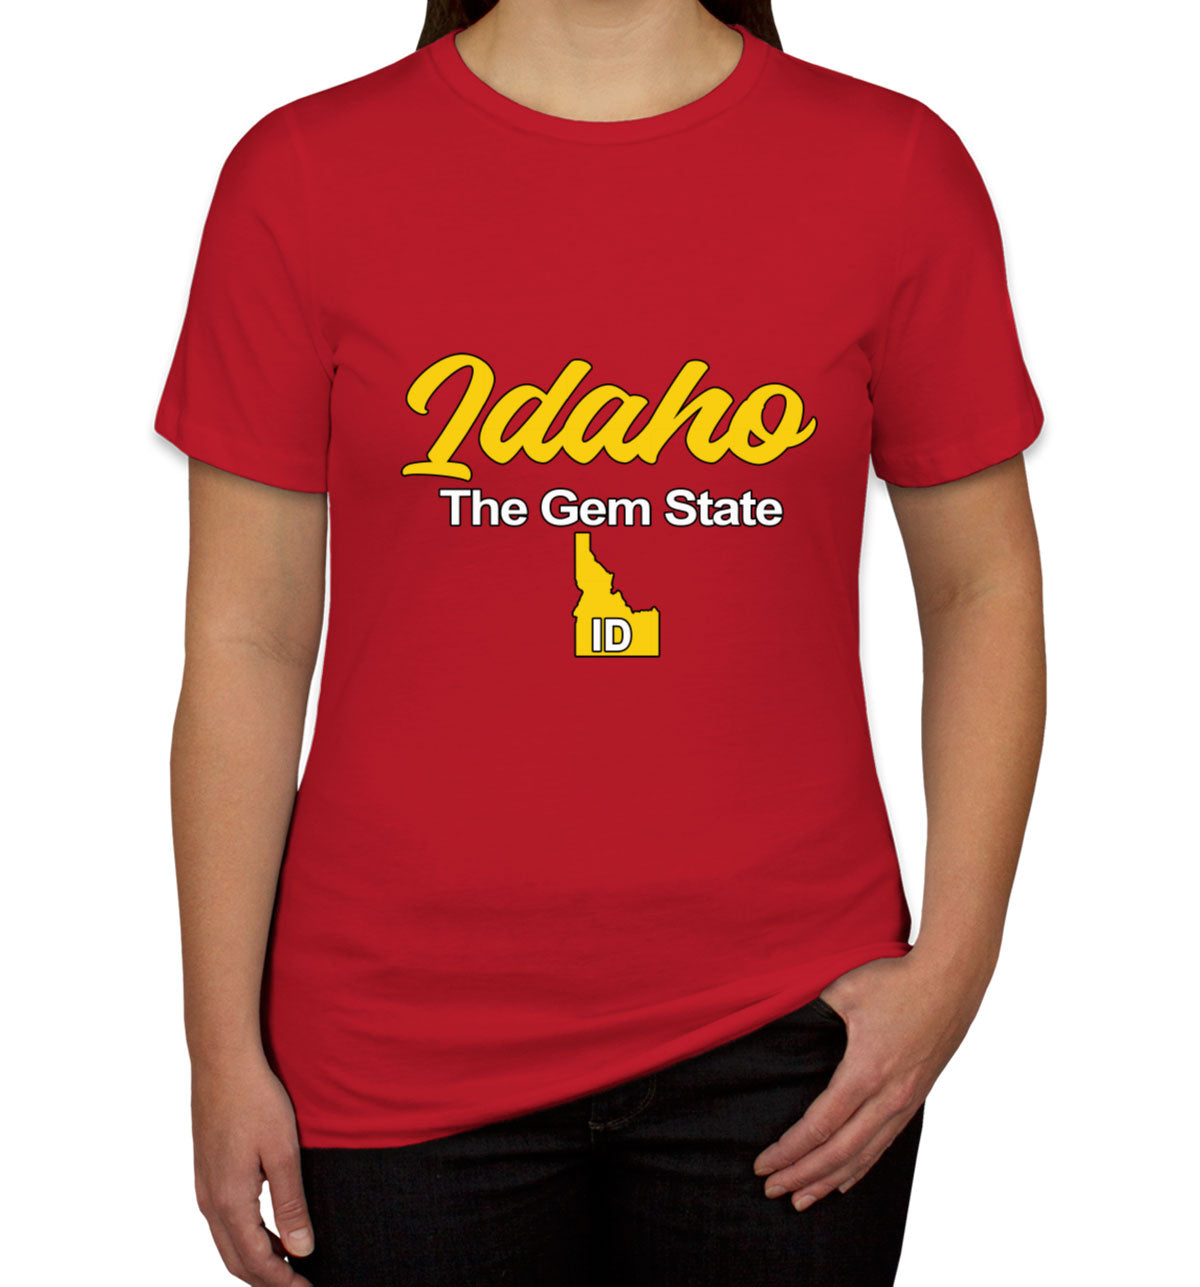 Idaho The Gem State Women's T-shirt